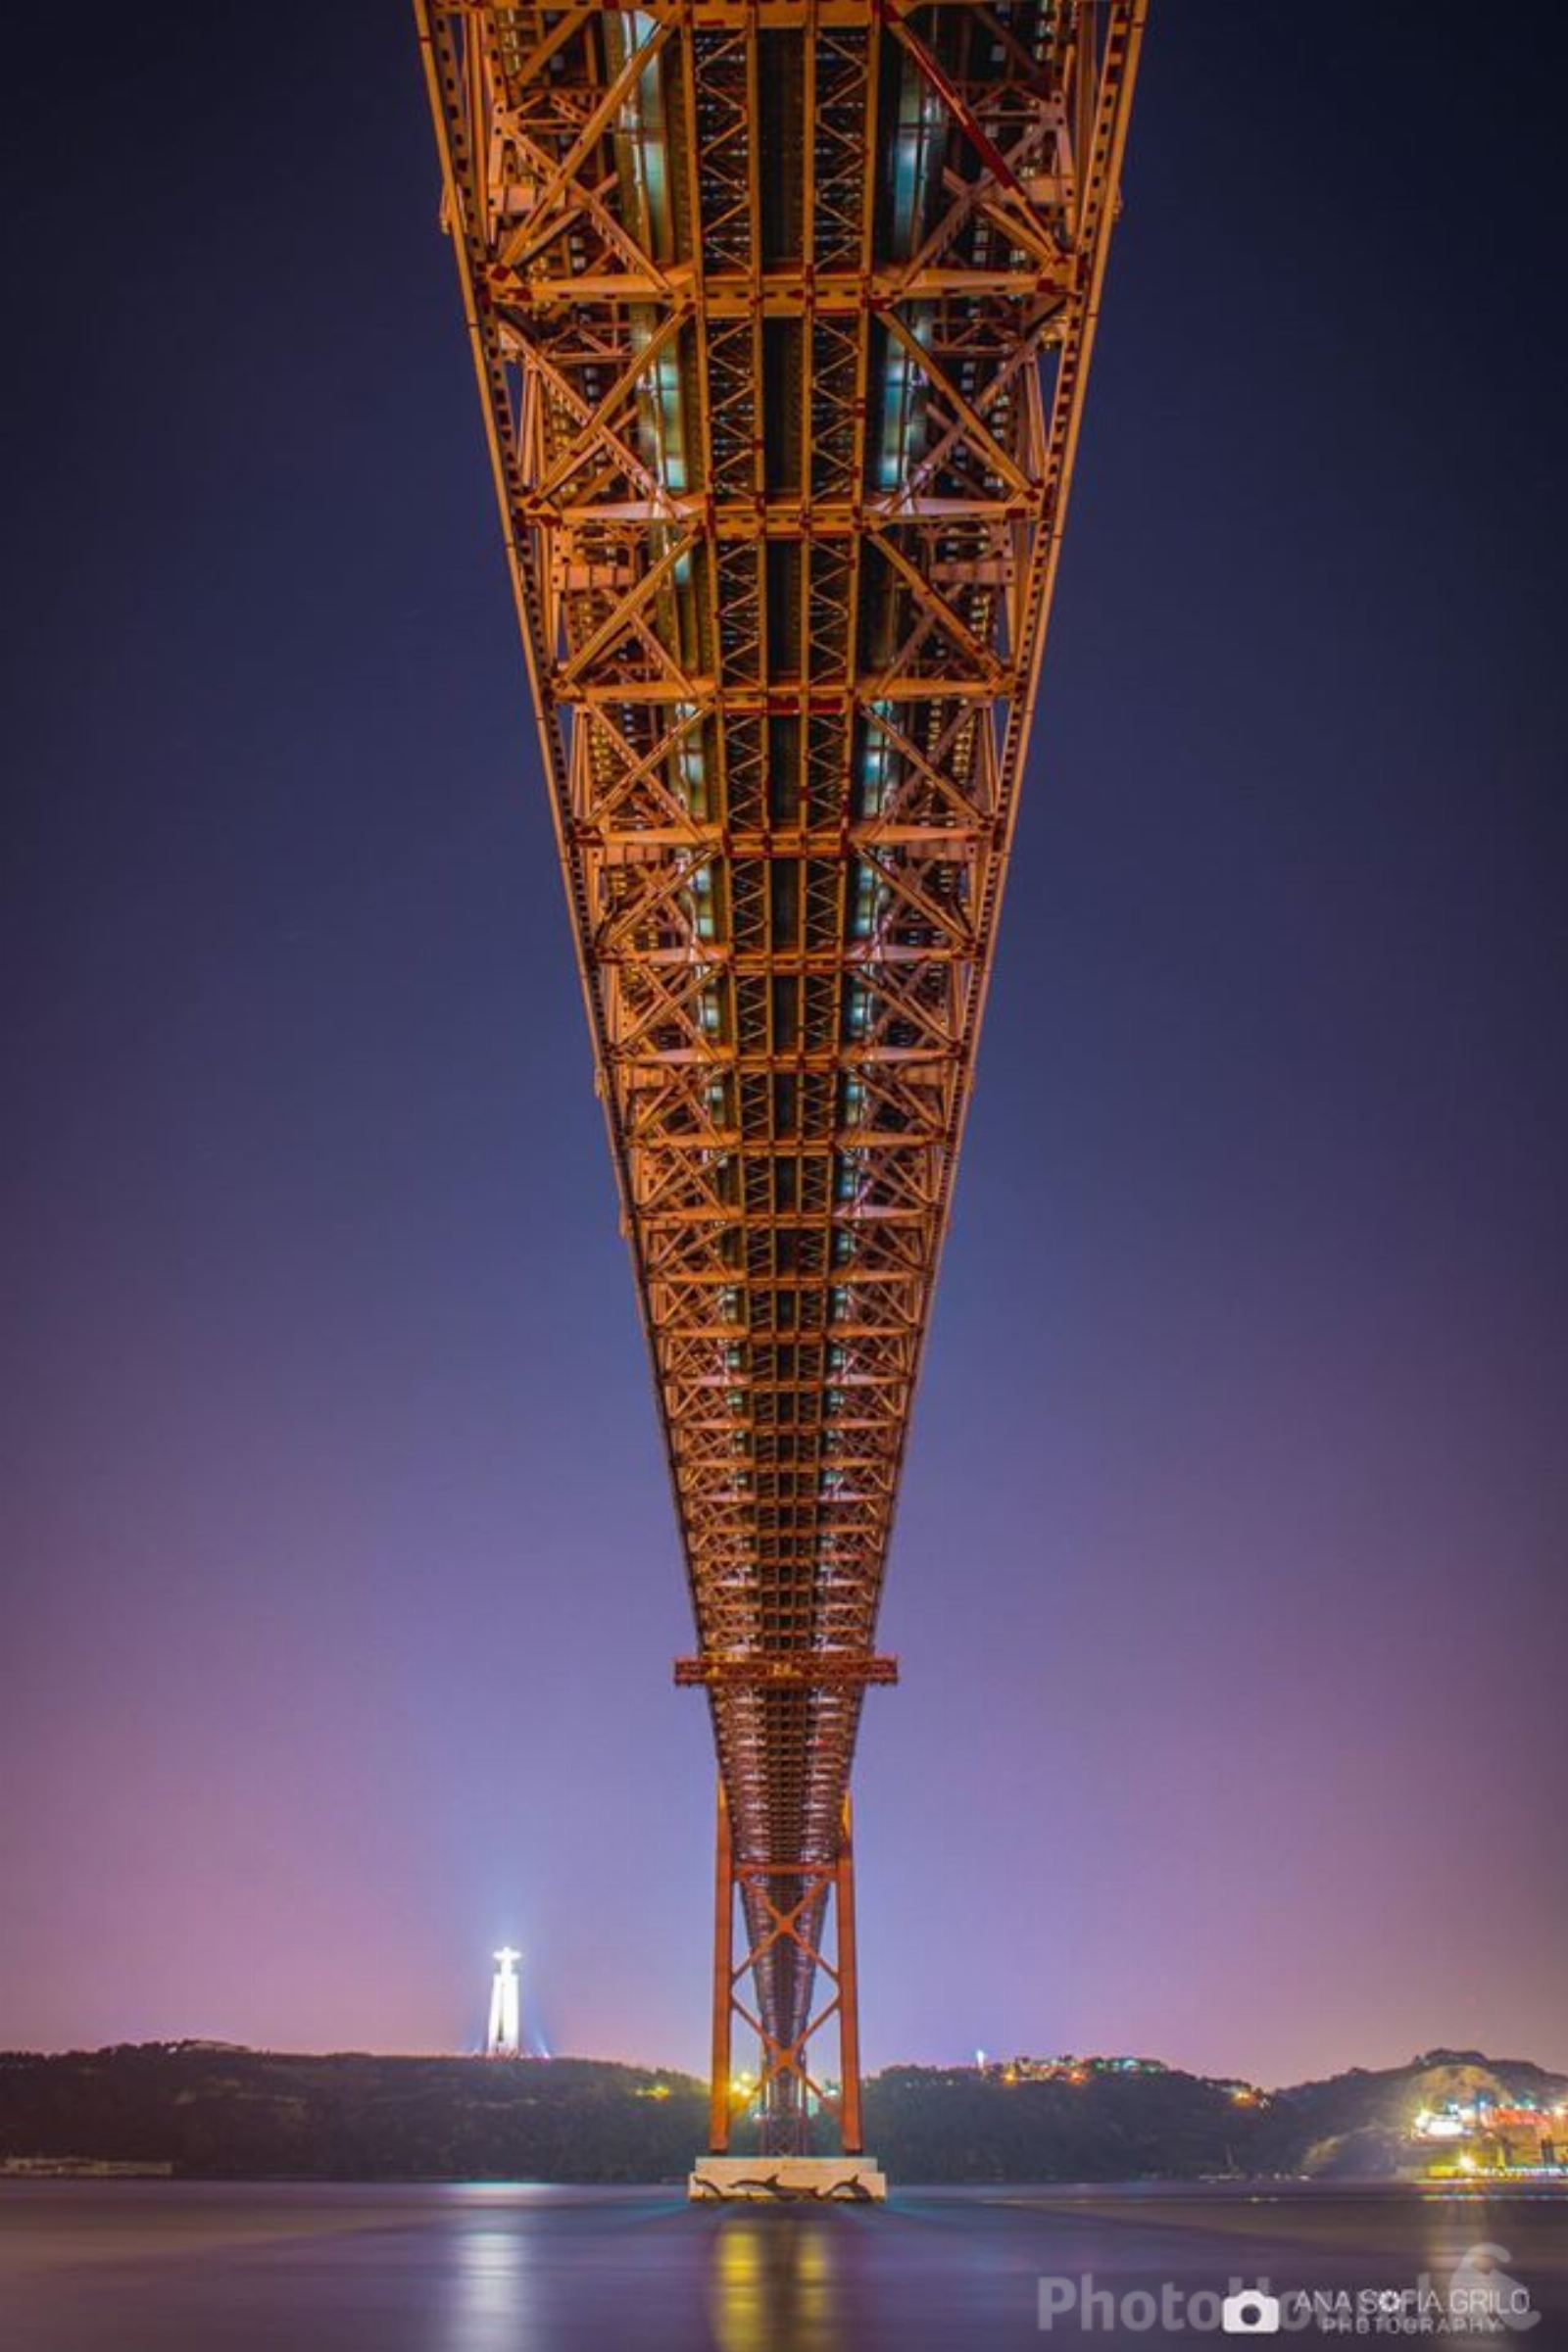 Image of 25 de Abril Bridge by Ana Sofia Grilo